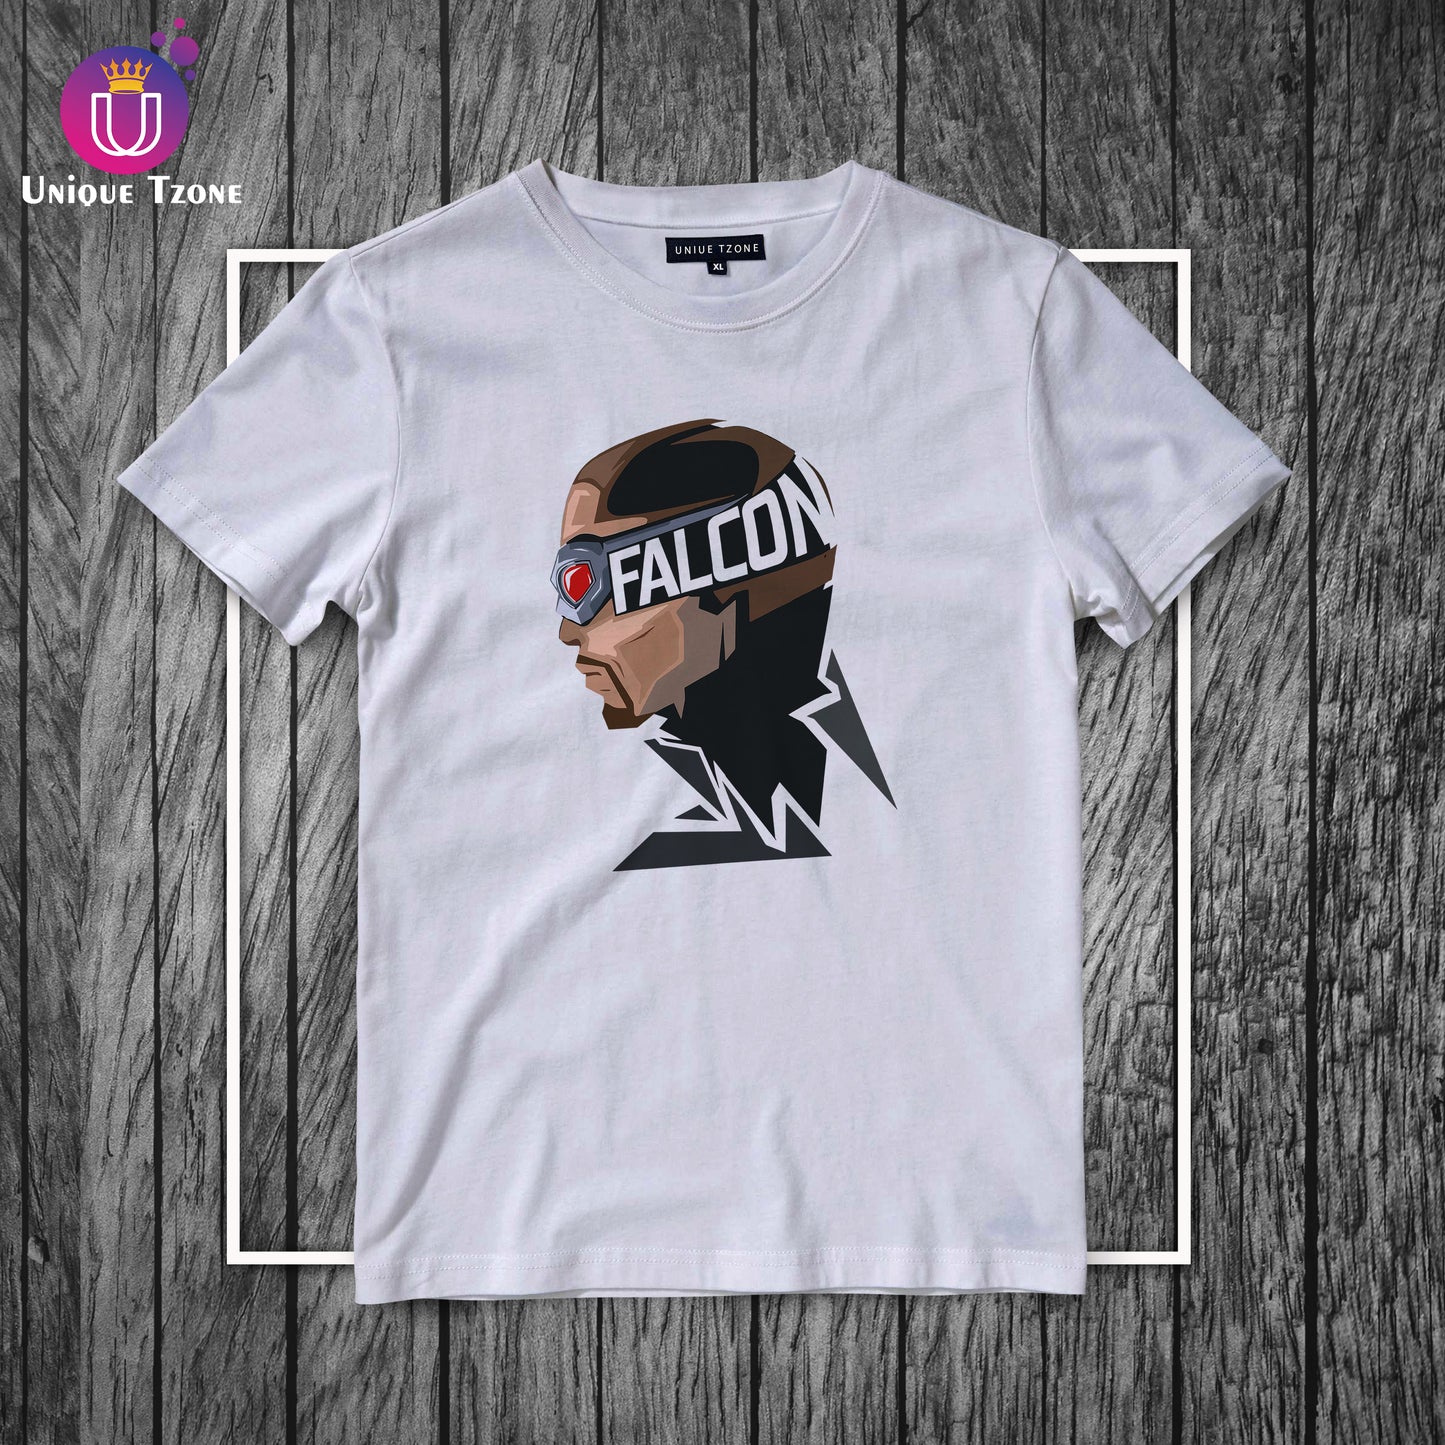 Falcon Marvel's Round Neck Half Sleeve Cotton T-shirt